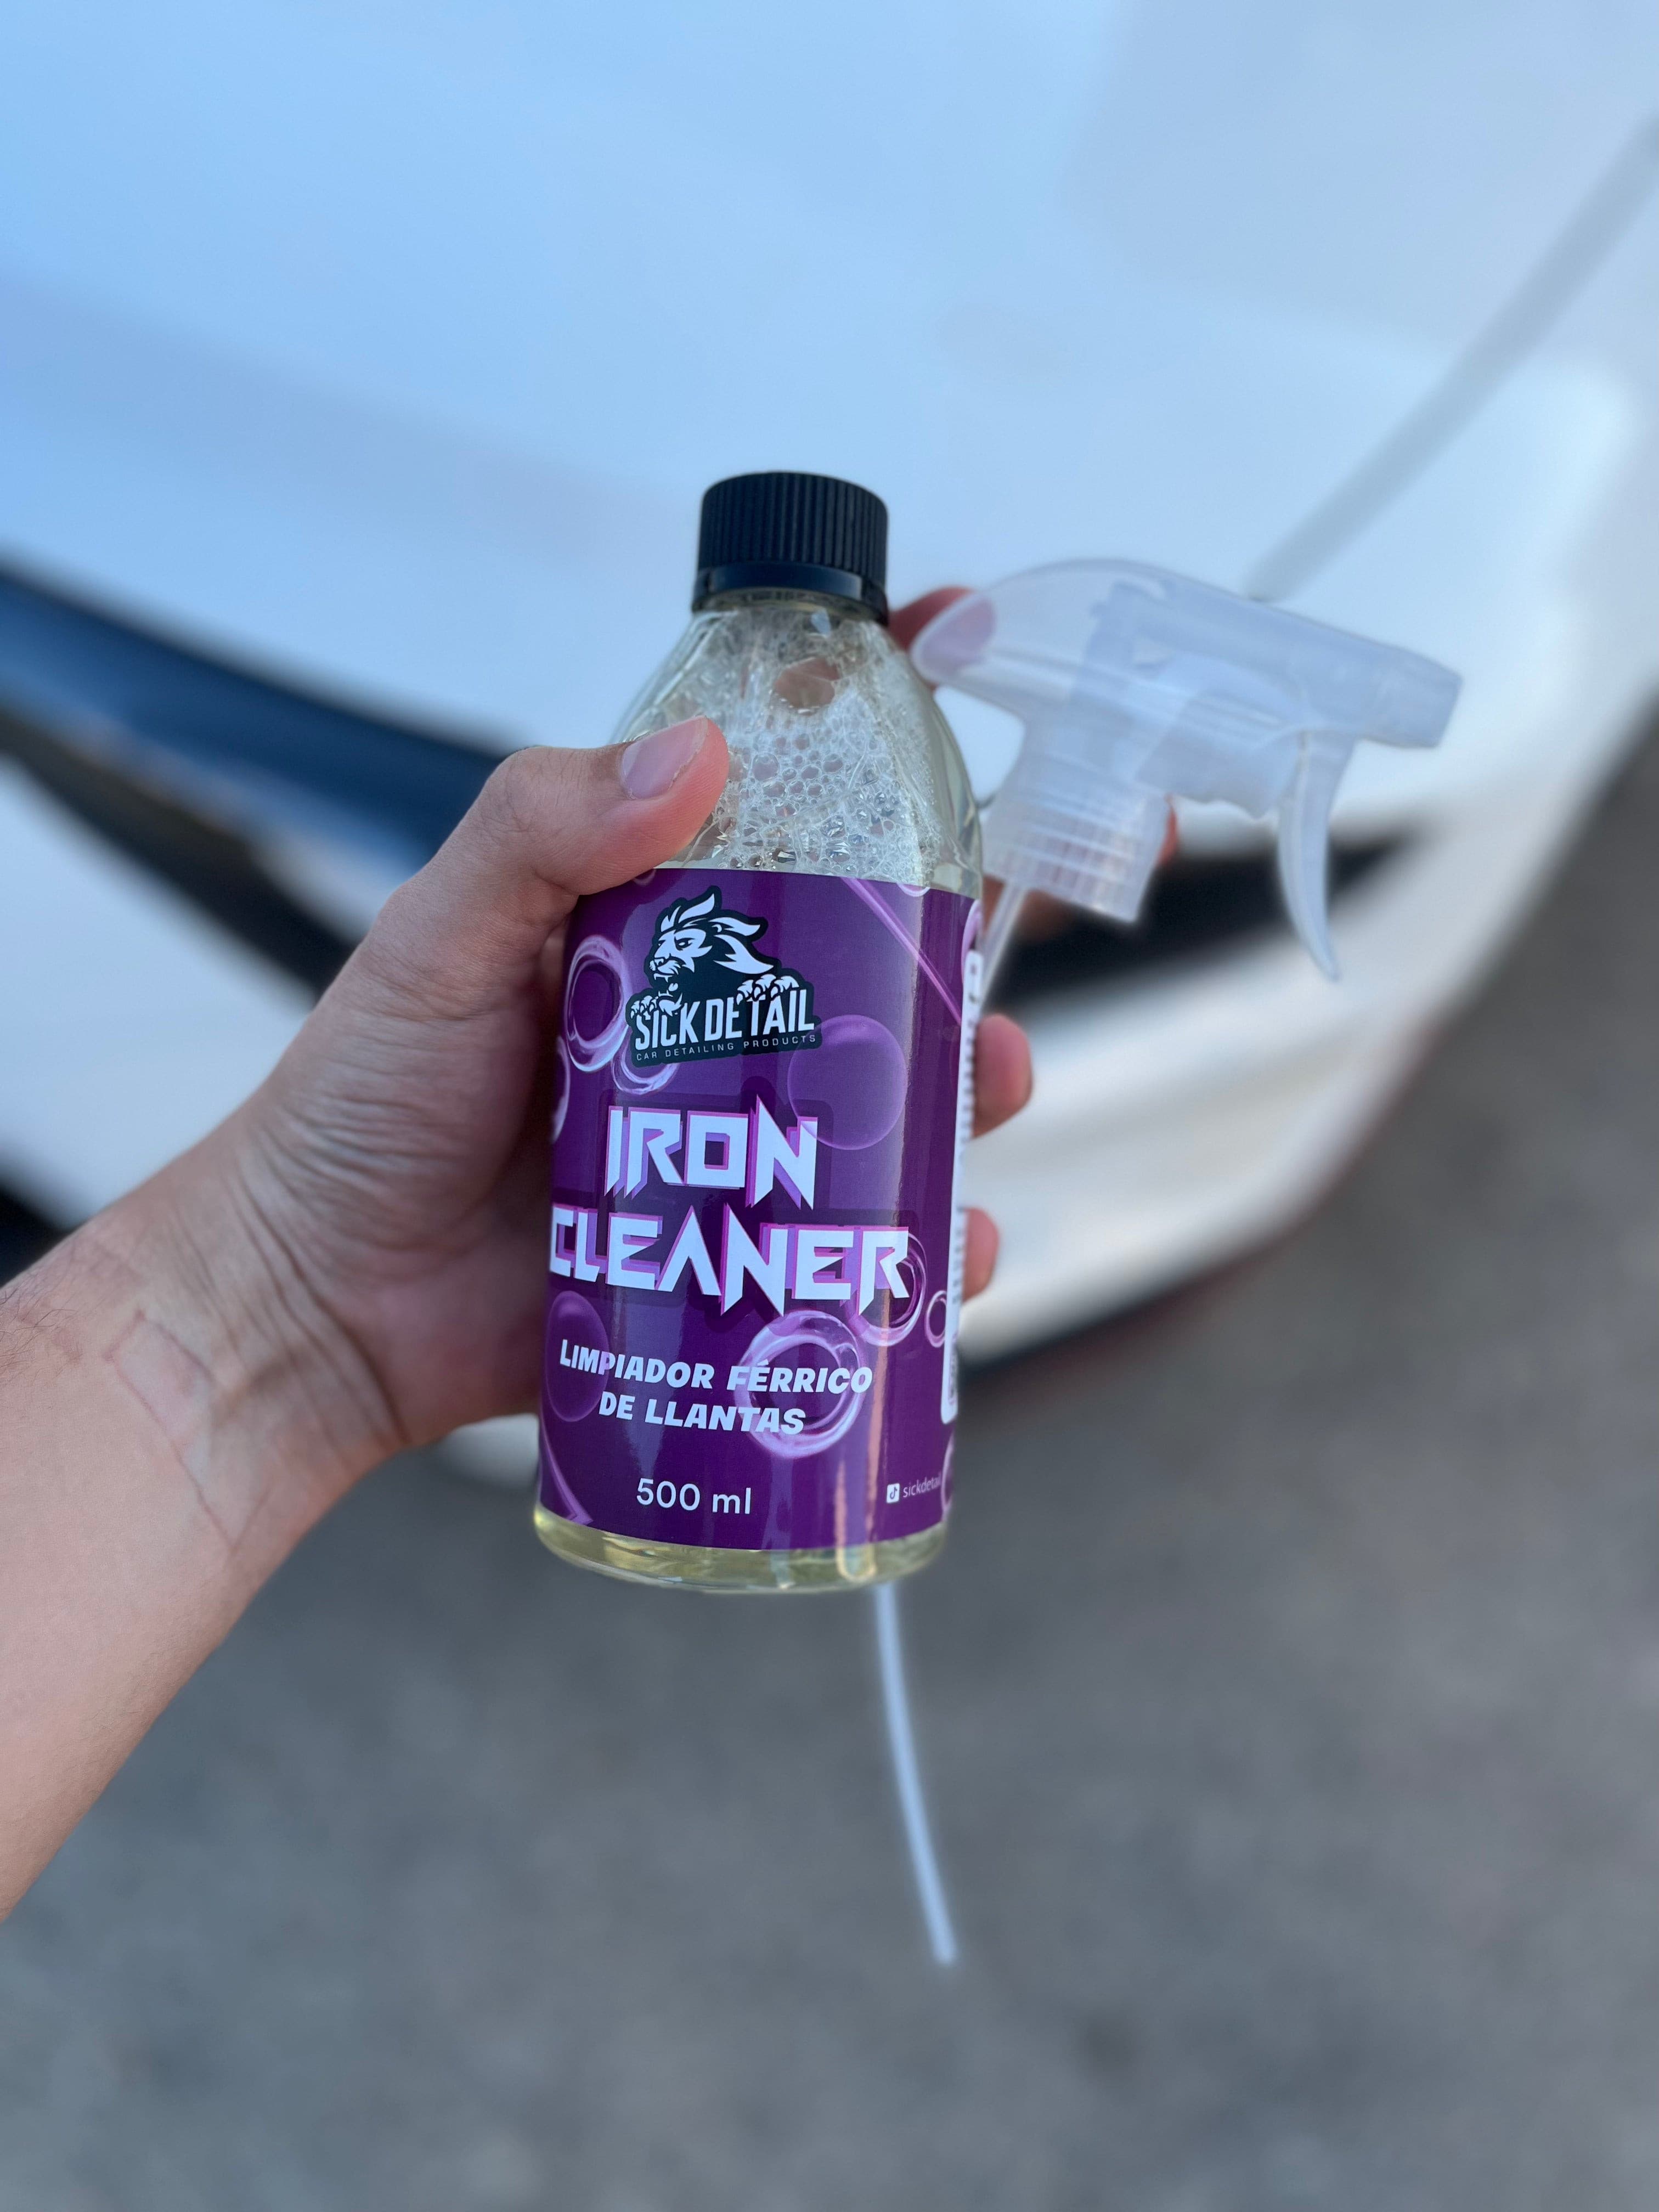 IRON CLEANER - Limpiador férrico de llantas